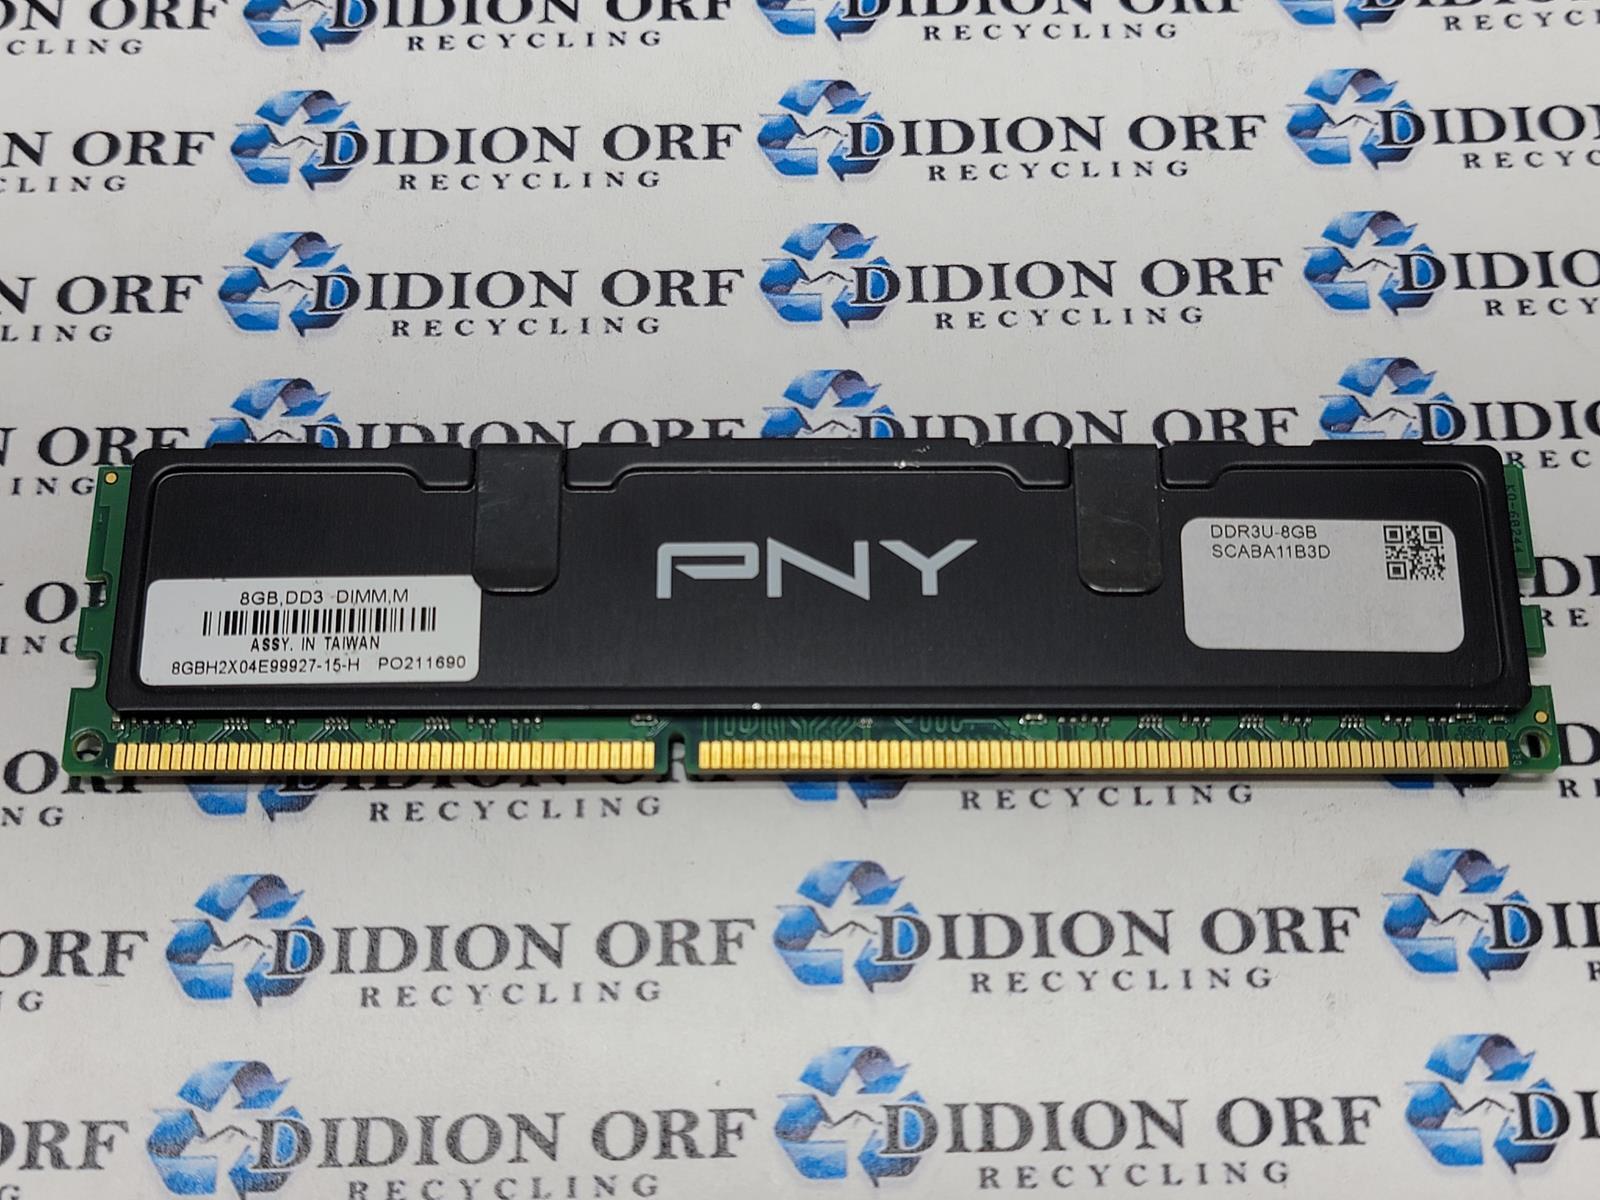 PNY XLR8 DDR3 DIMM RAM 1600mhz 8GB 8GBH2X04E99927-15-H Desktop RAM SKU 8479